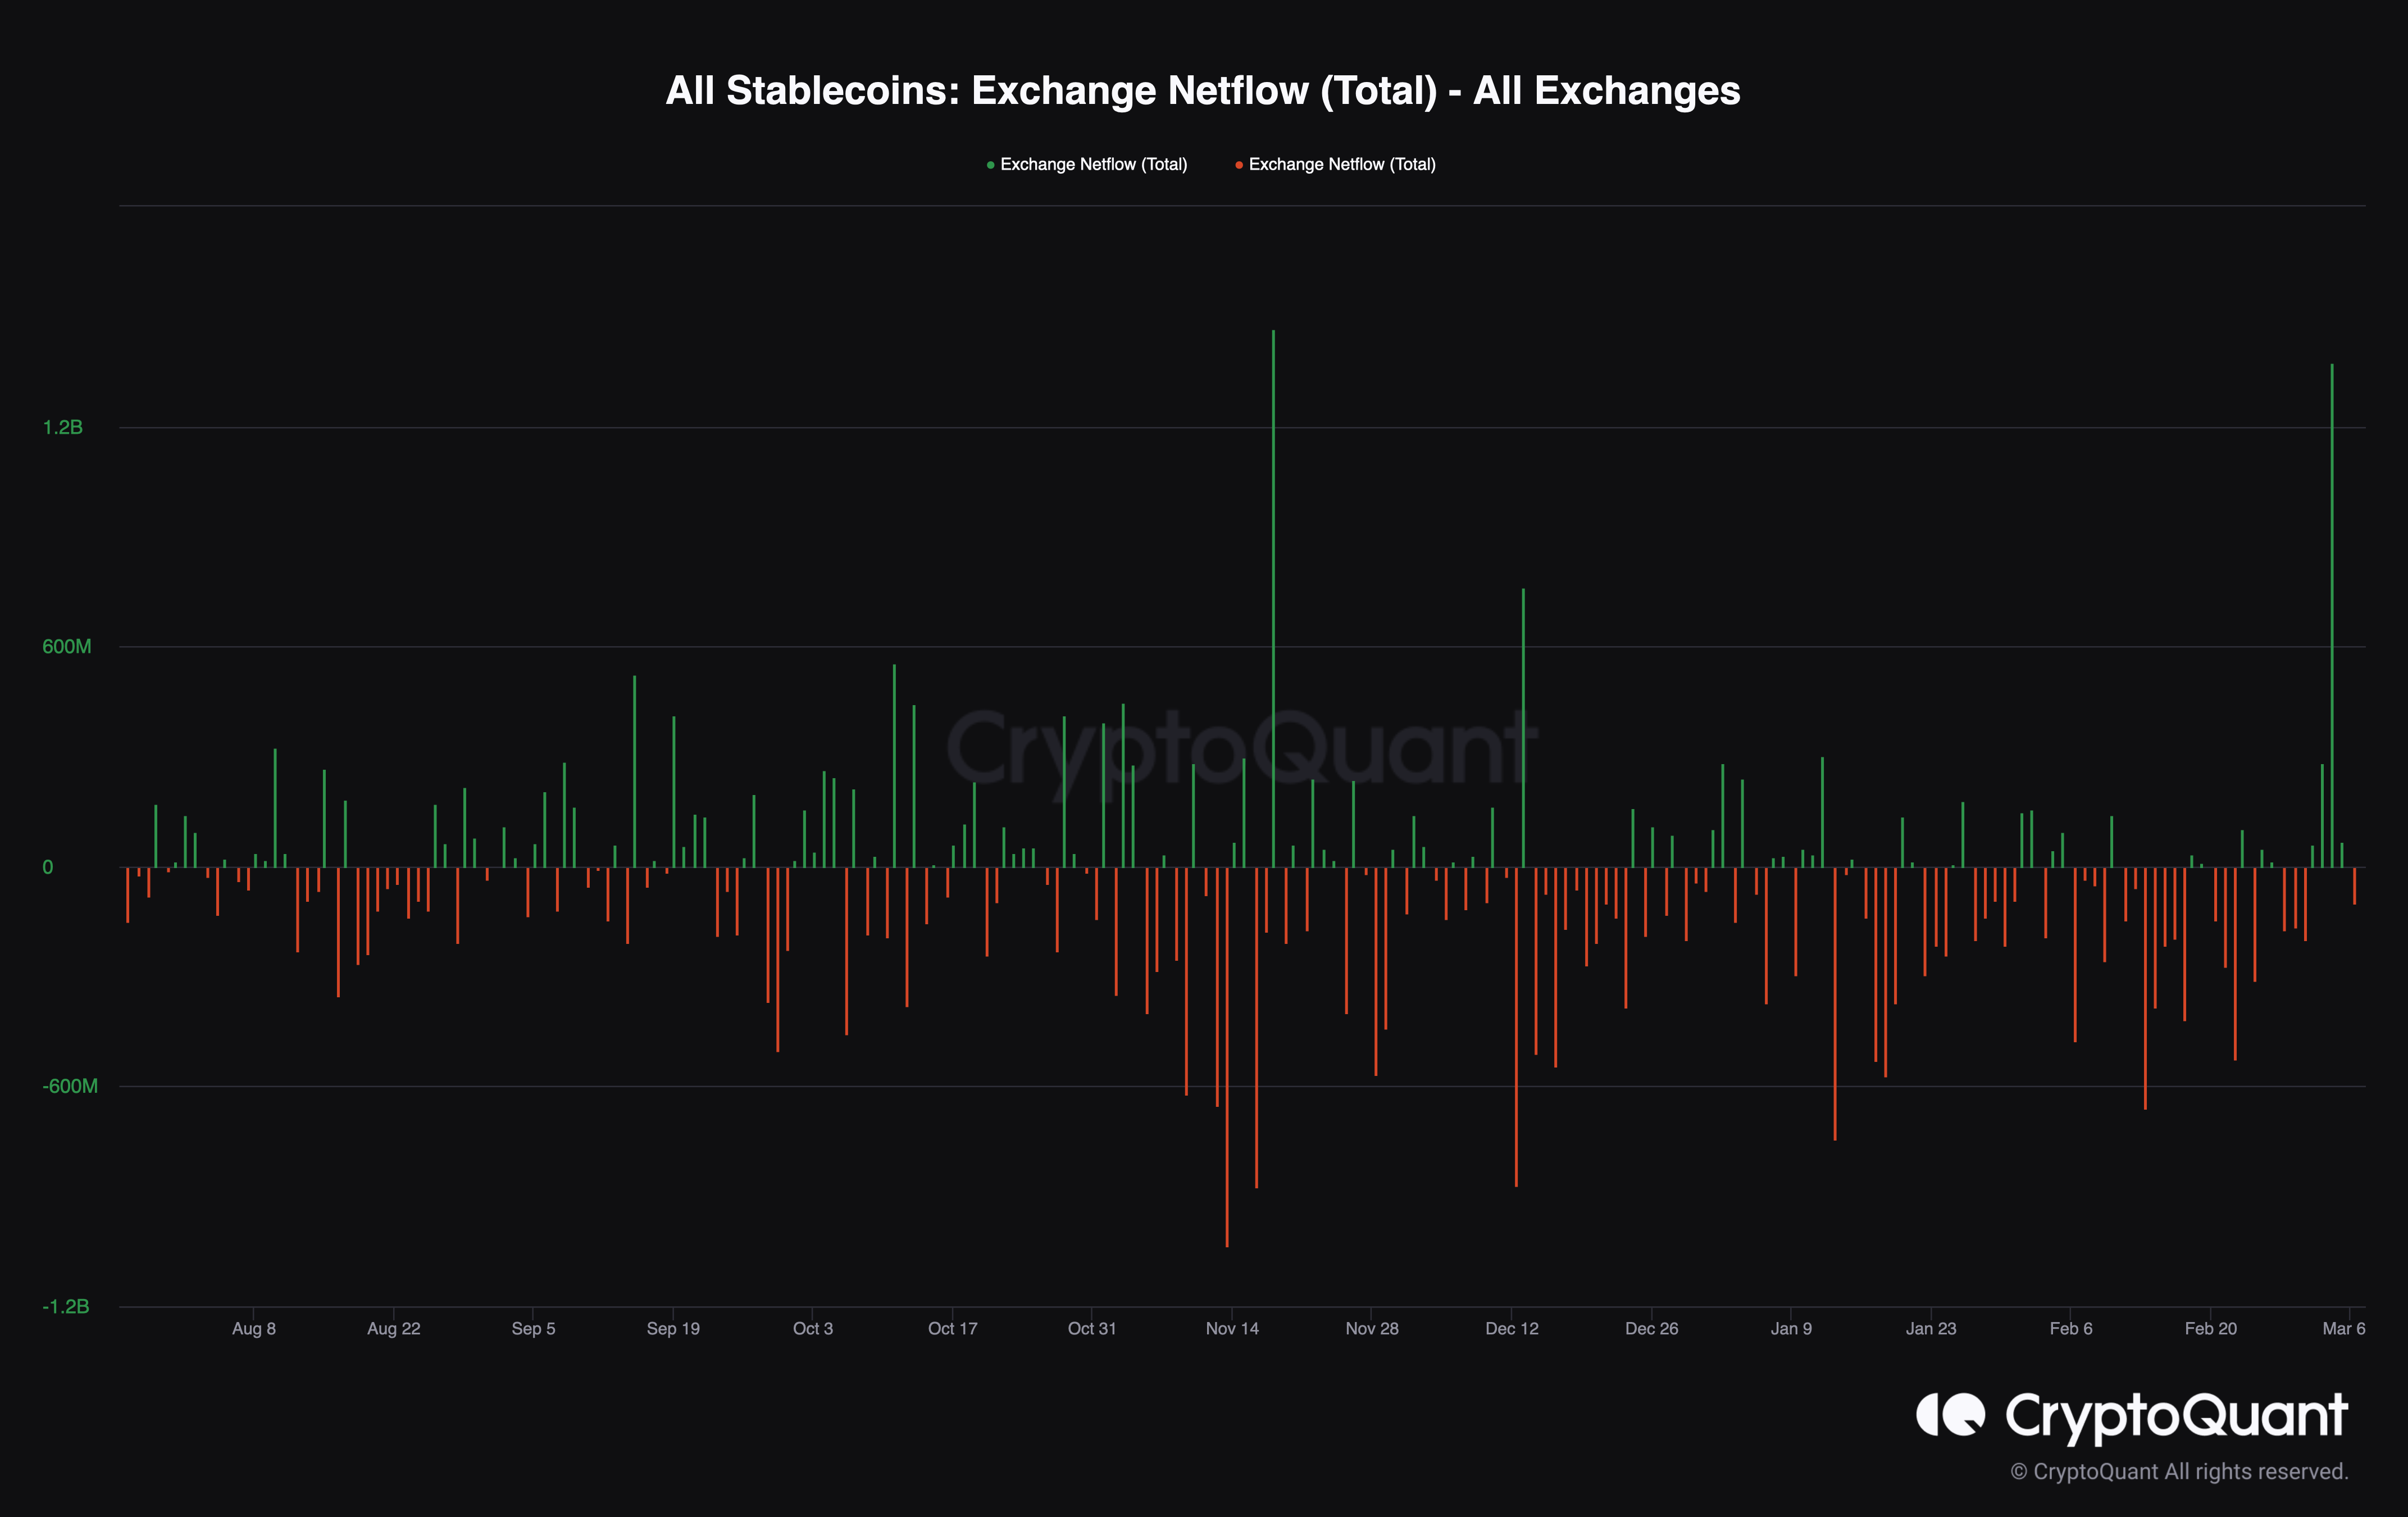 Stablecoin exchange netflow chart